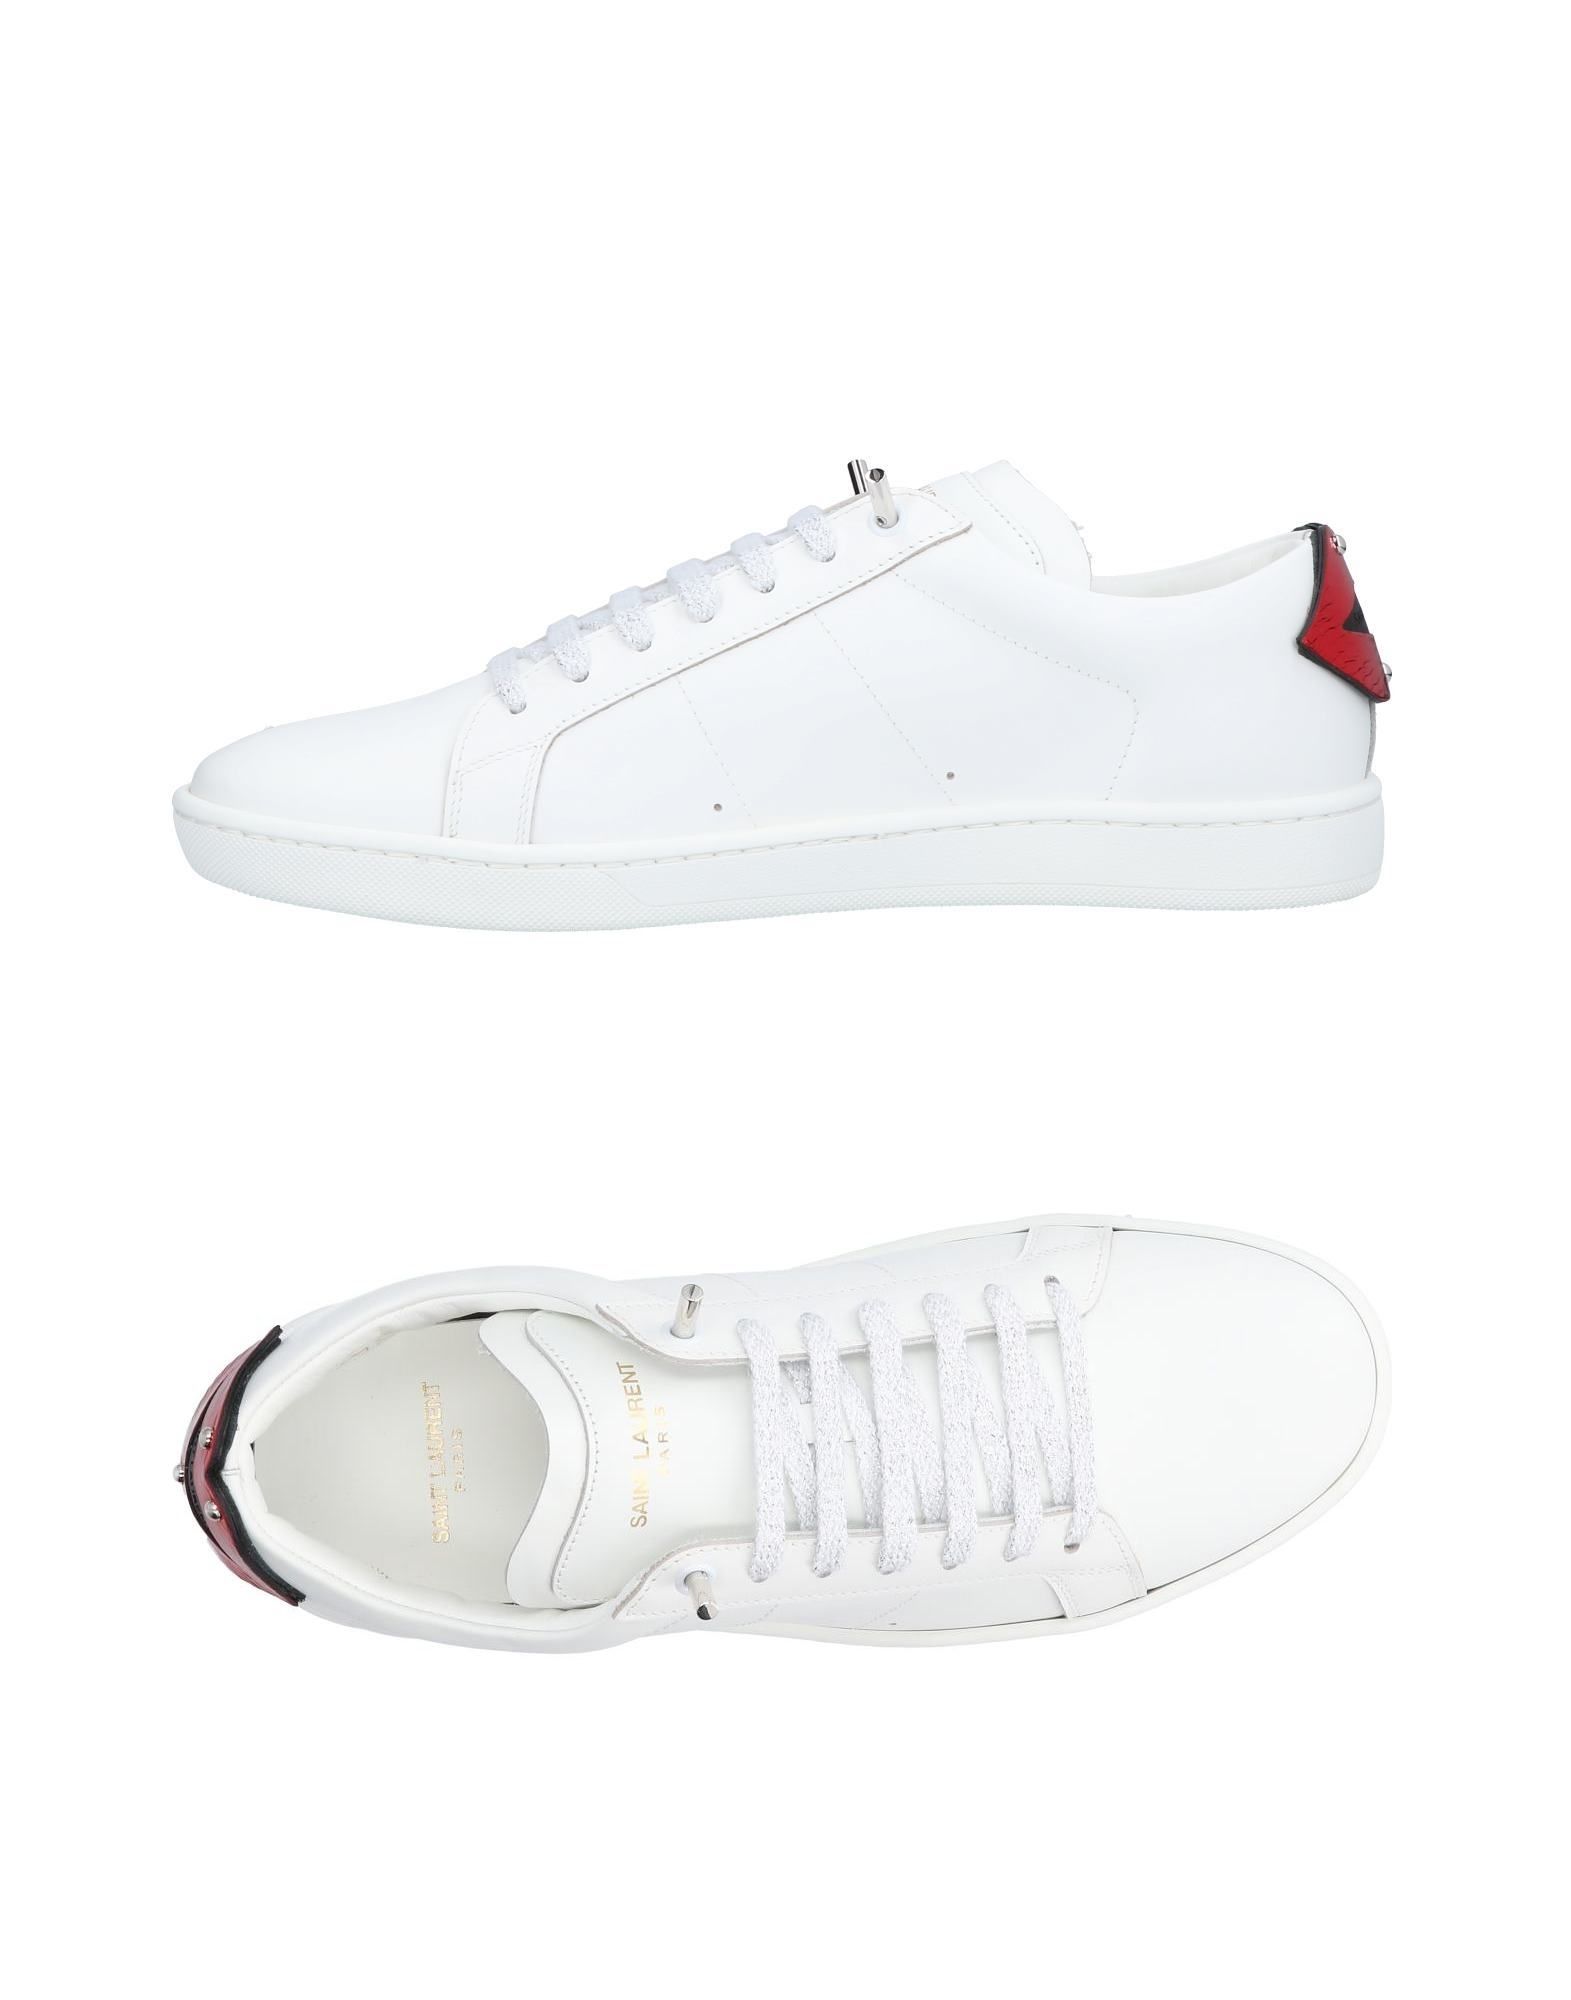 ysl men's white sneakers